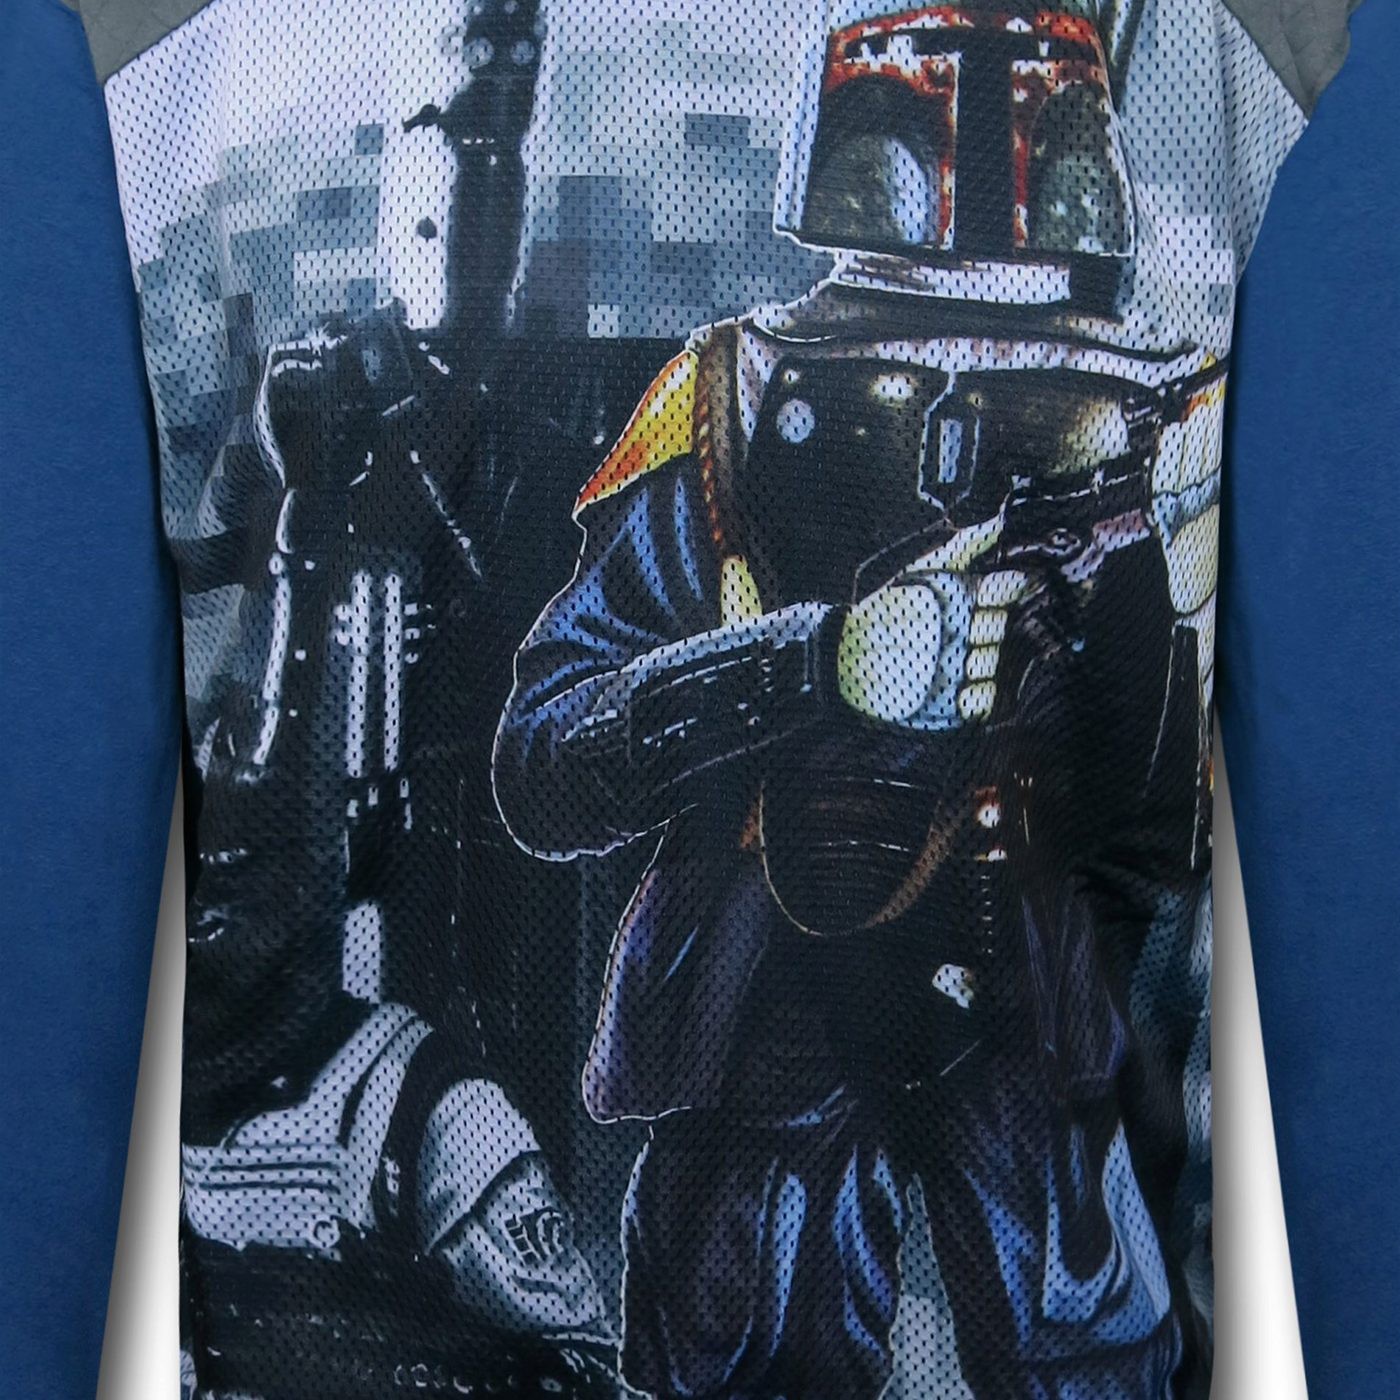 Star Wars Prime Bounty Crew Neck Sweatshirt